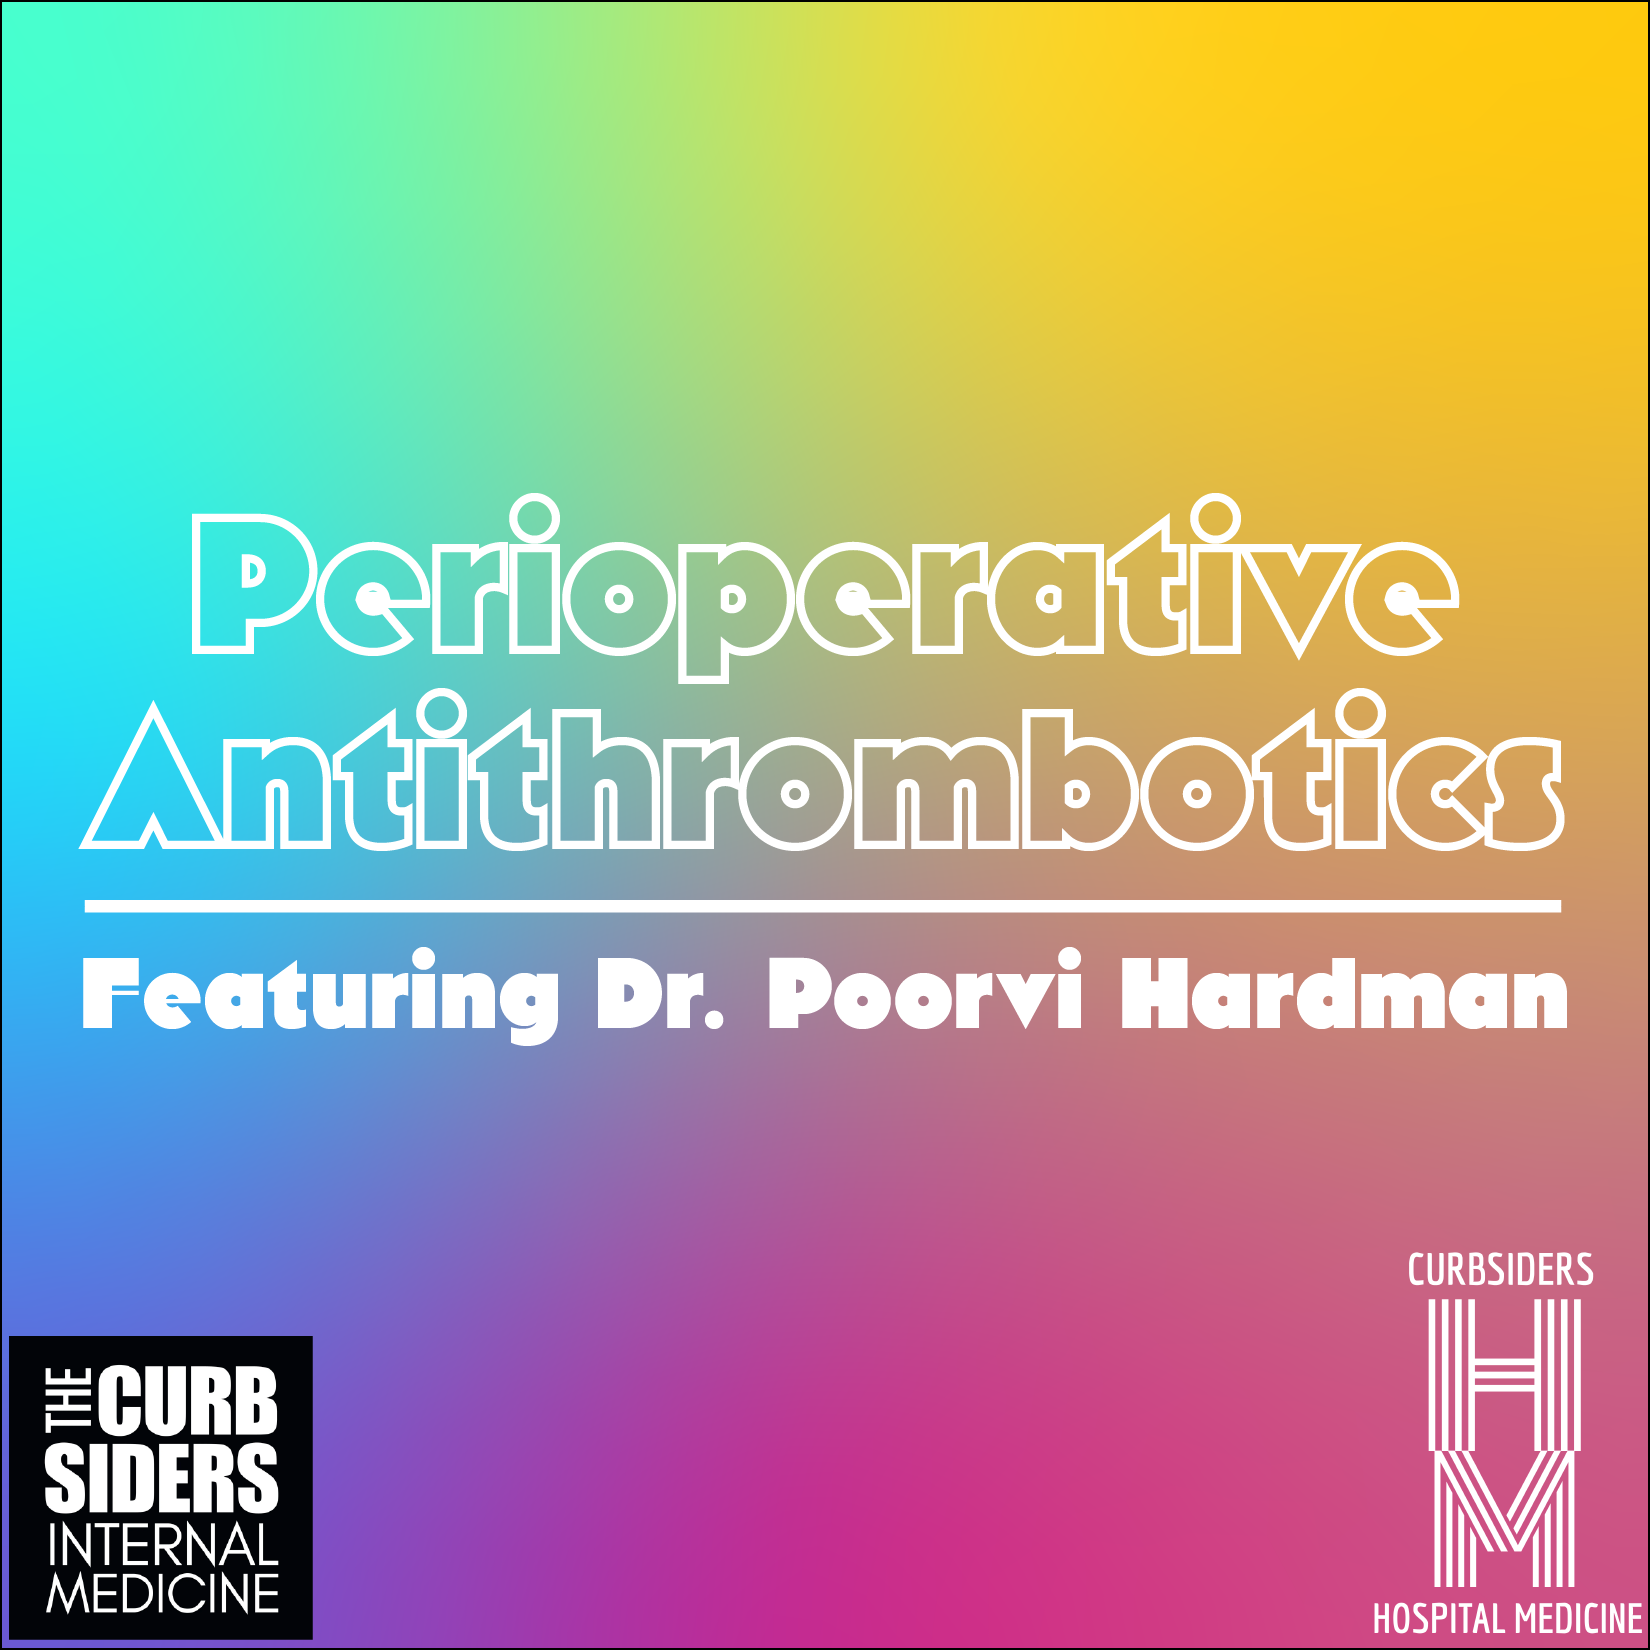 #425 Perioperative Management of Antithrombotics with Dr. Poorvi Hardman